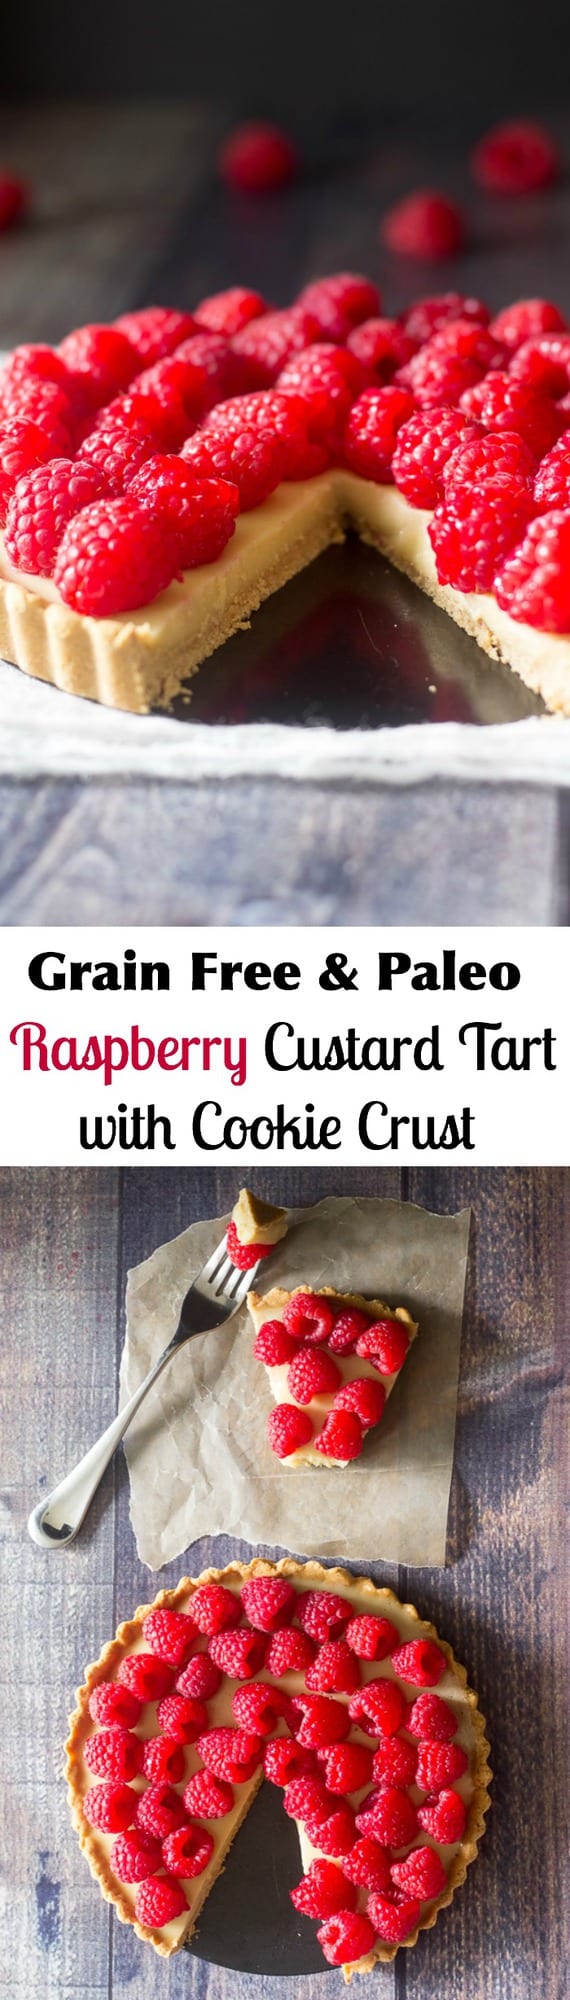 Raspberry Custard Tart with cookie crust - grain free and paleo